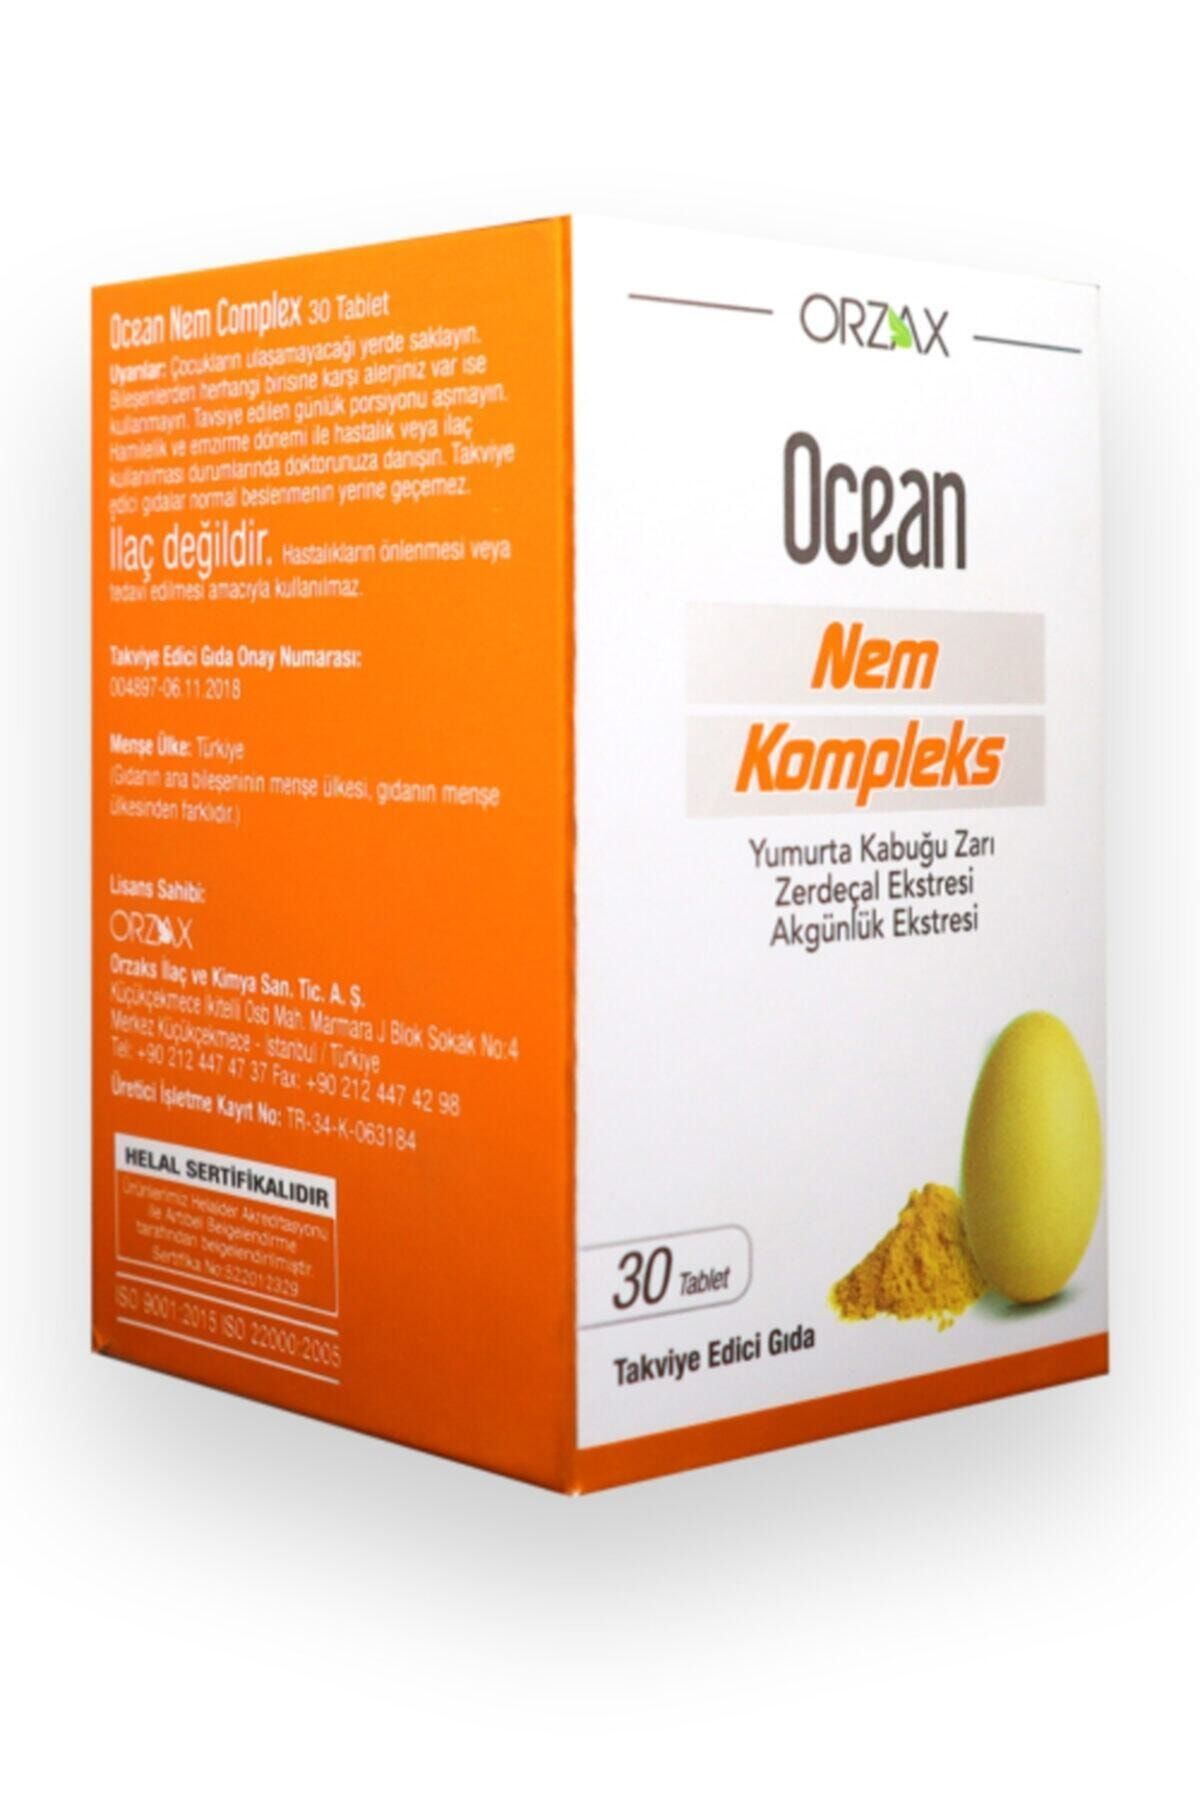 Ocean Ocean Nem Kompleks 30 Tablet